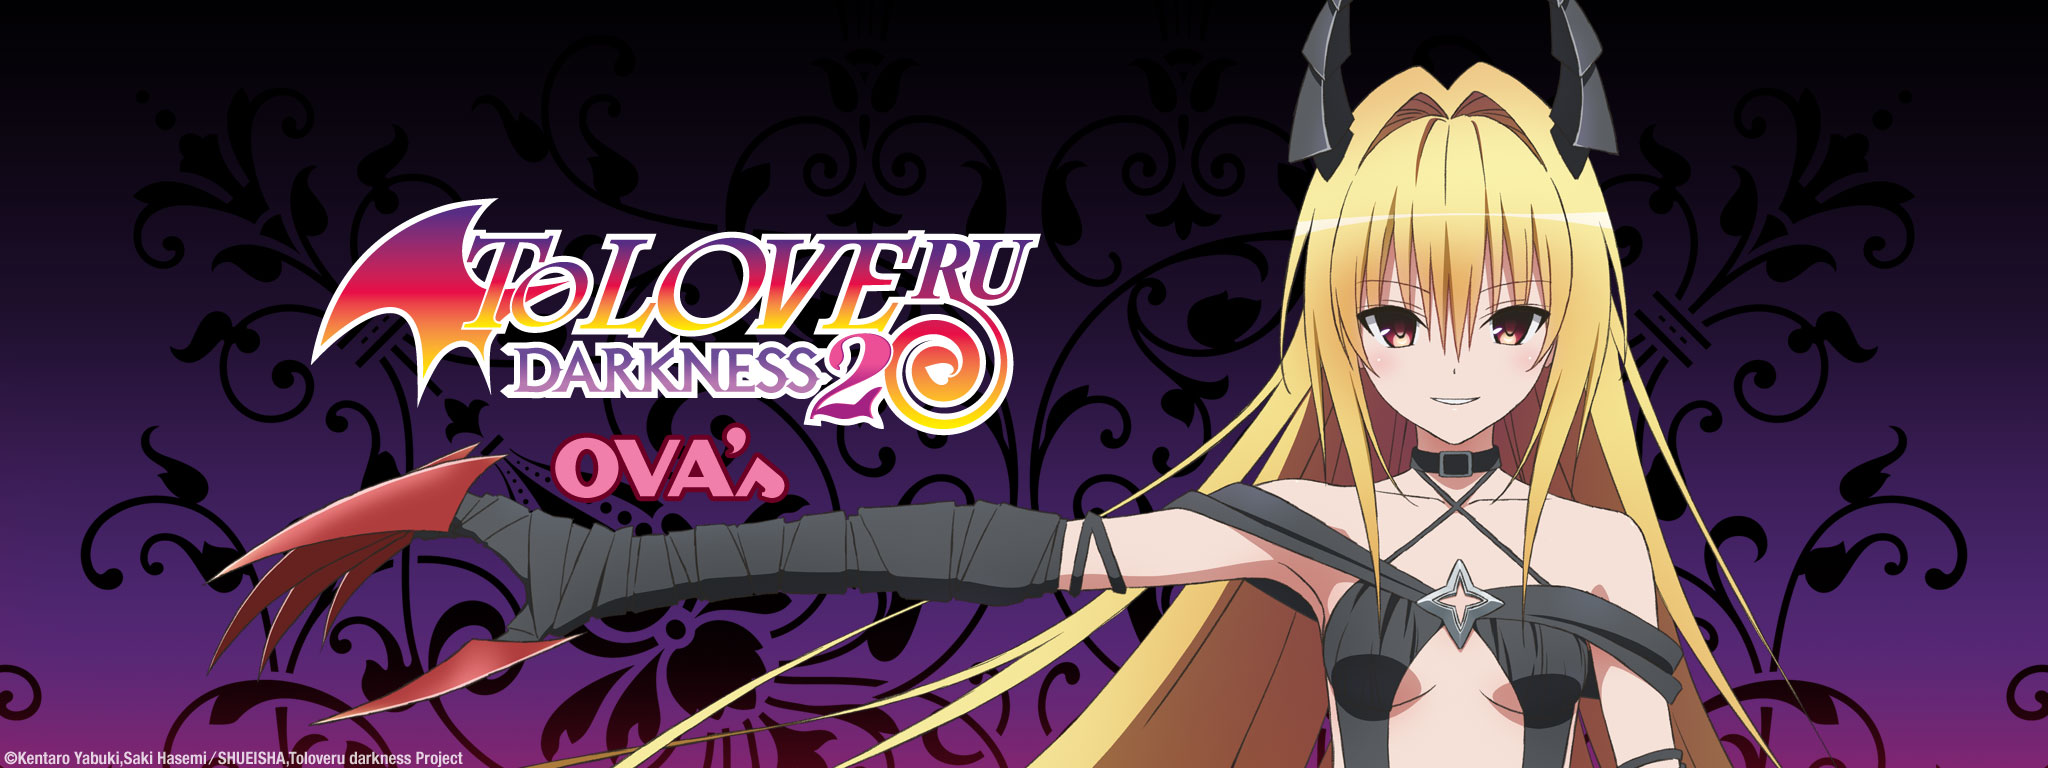 Title Art for To loveru Darkness 2 - OVA